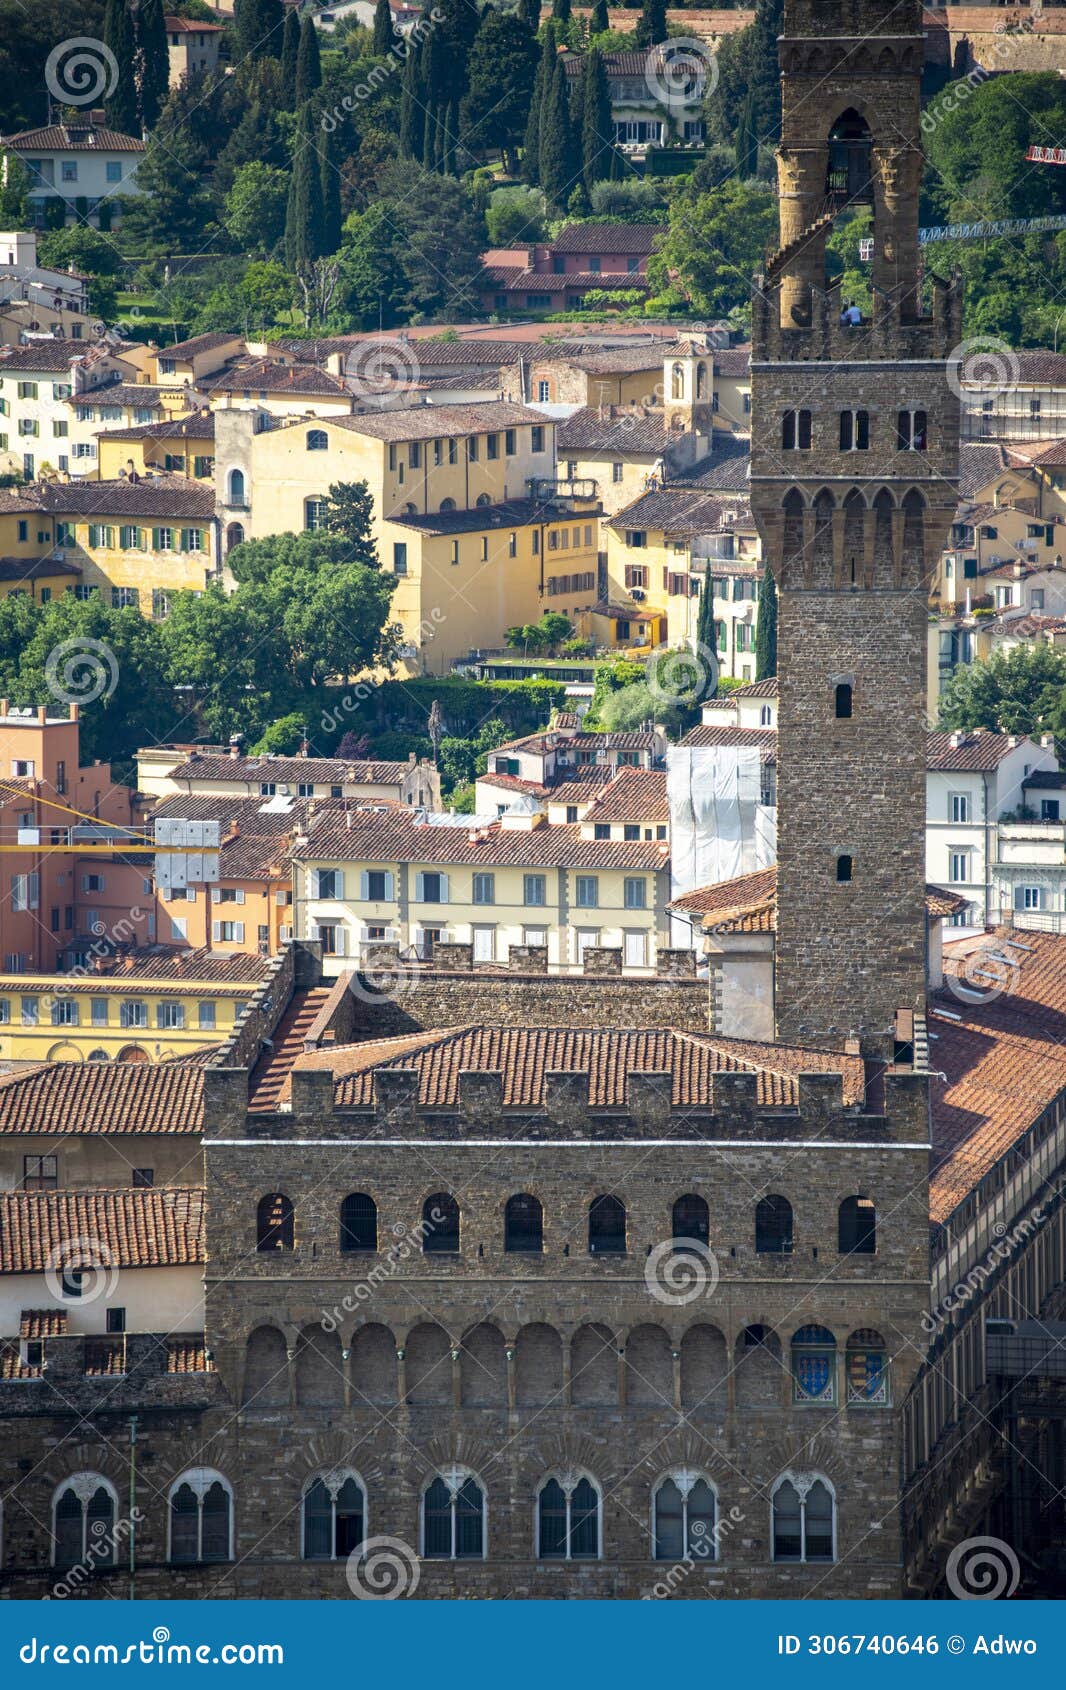 arnolfo tower